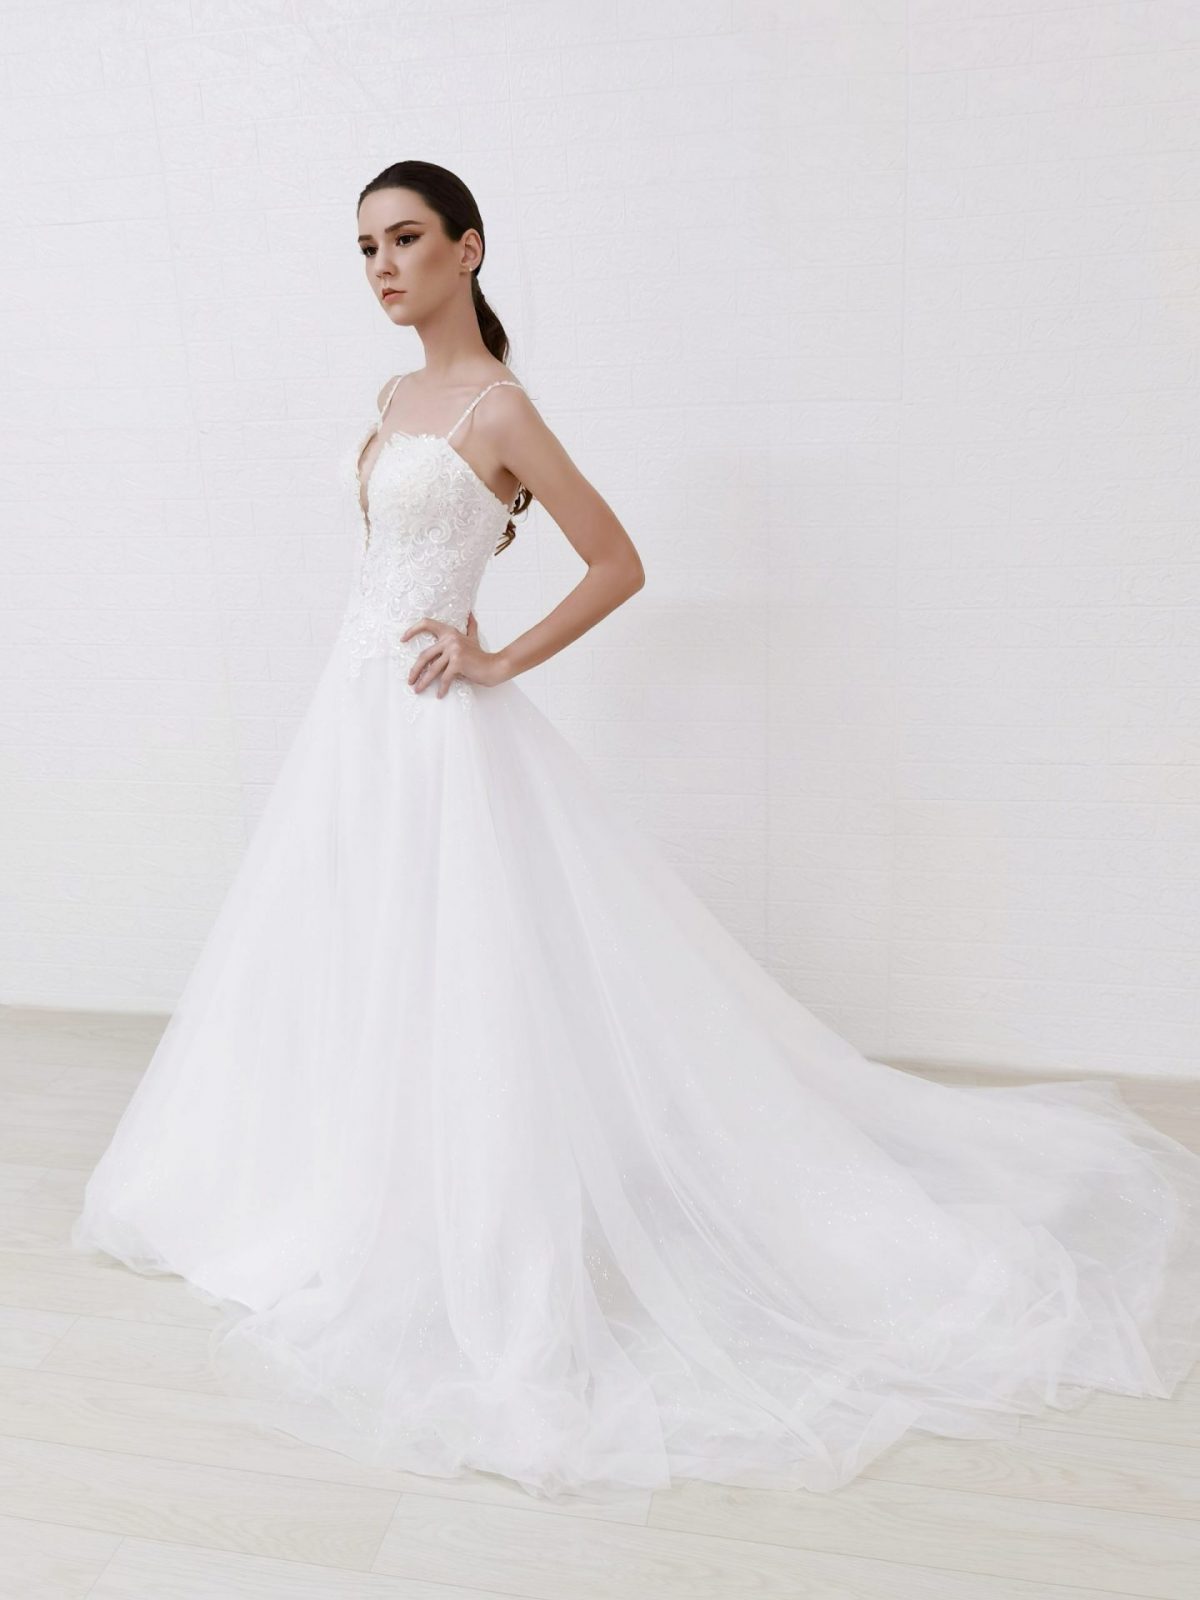 gorgeous wedding dress by fluerdsign